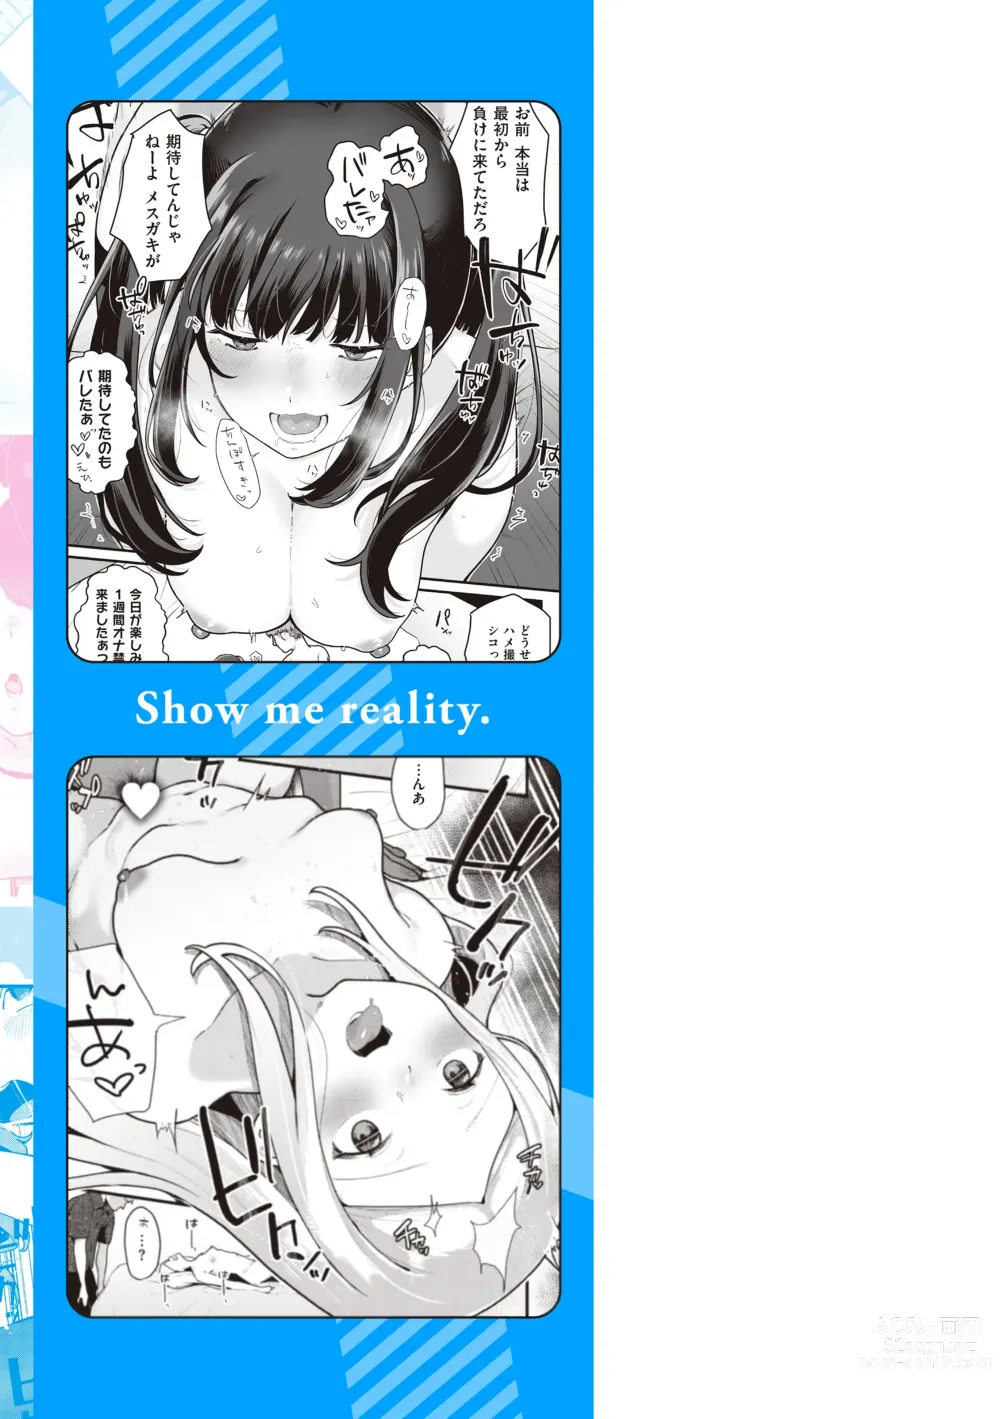 Page 166 of manga Wakarasete. - Show me reality.